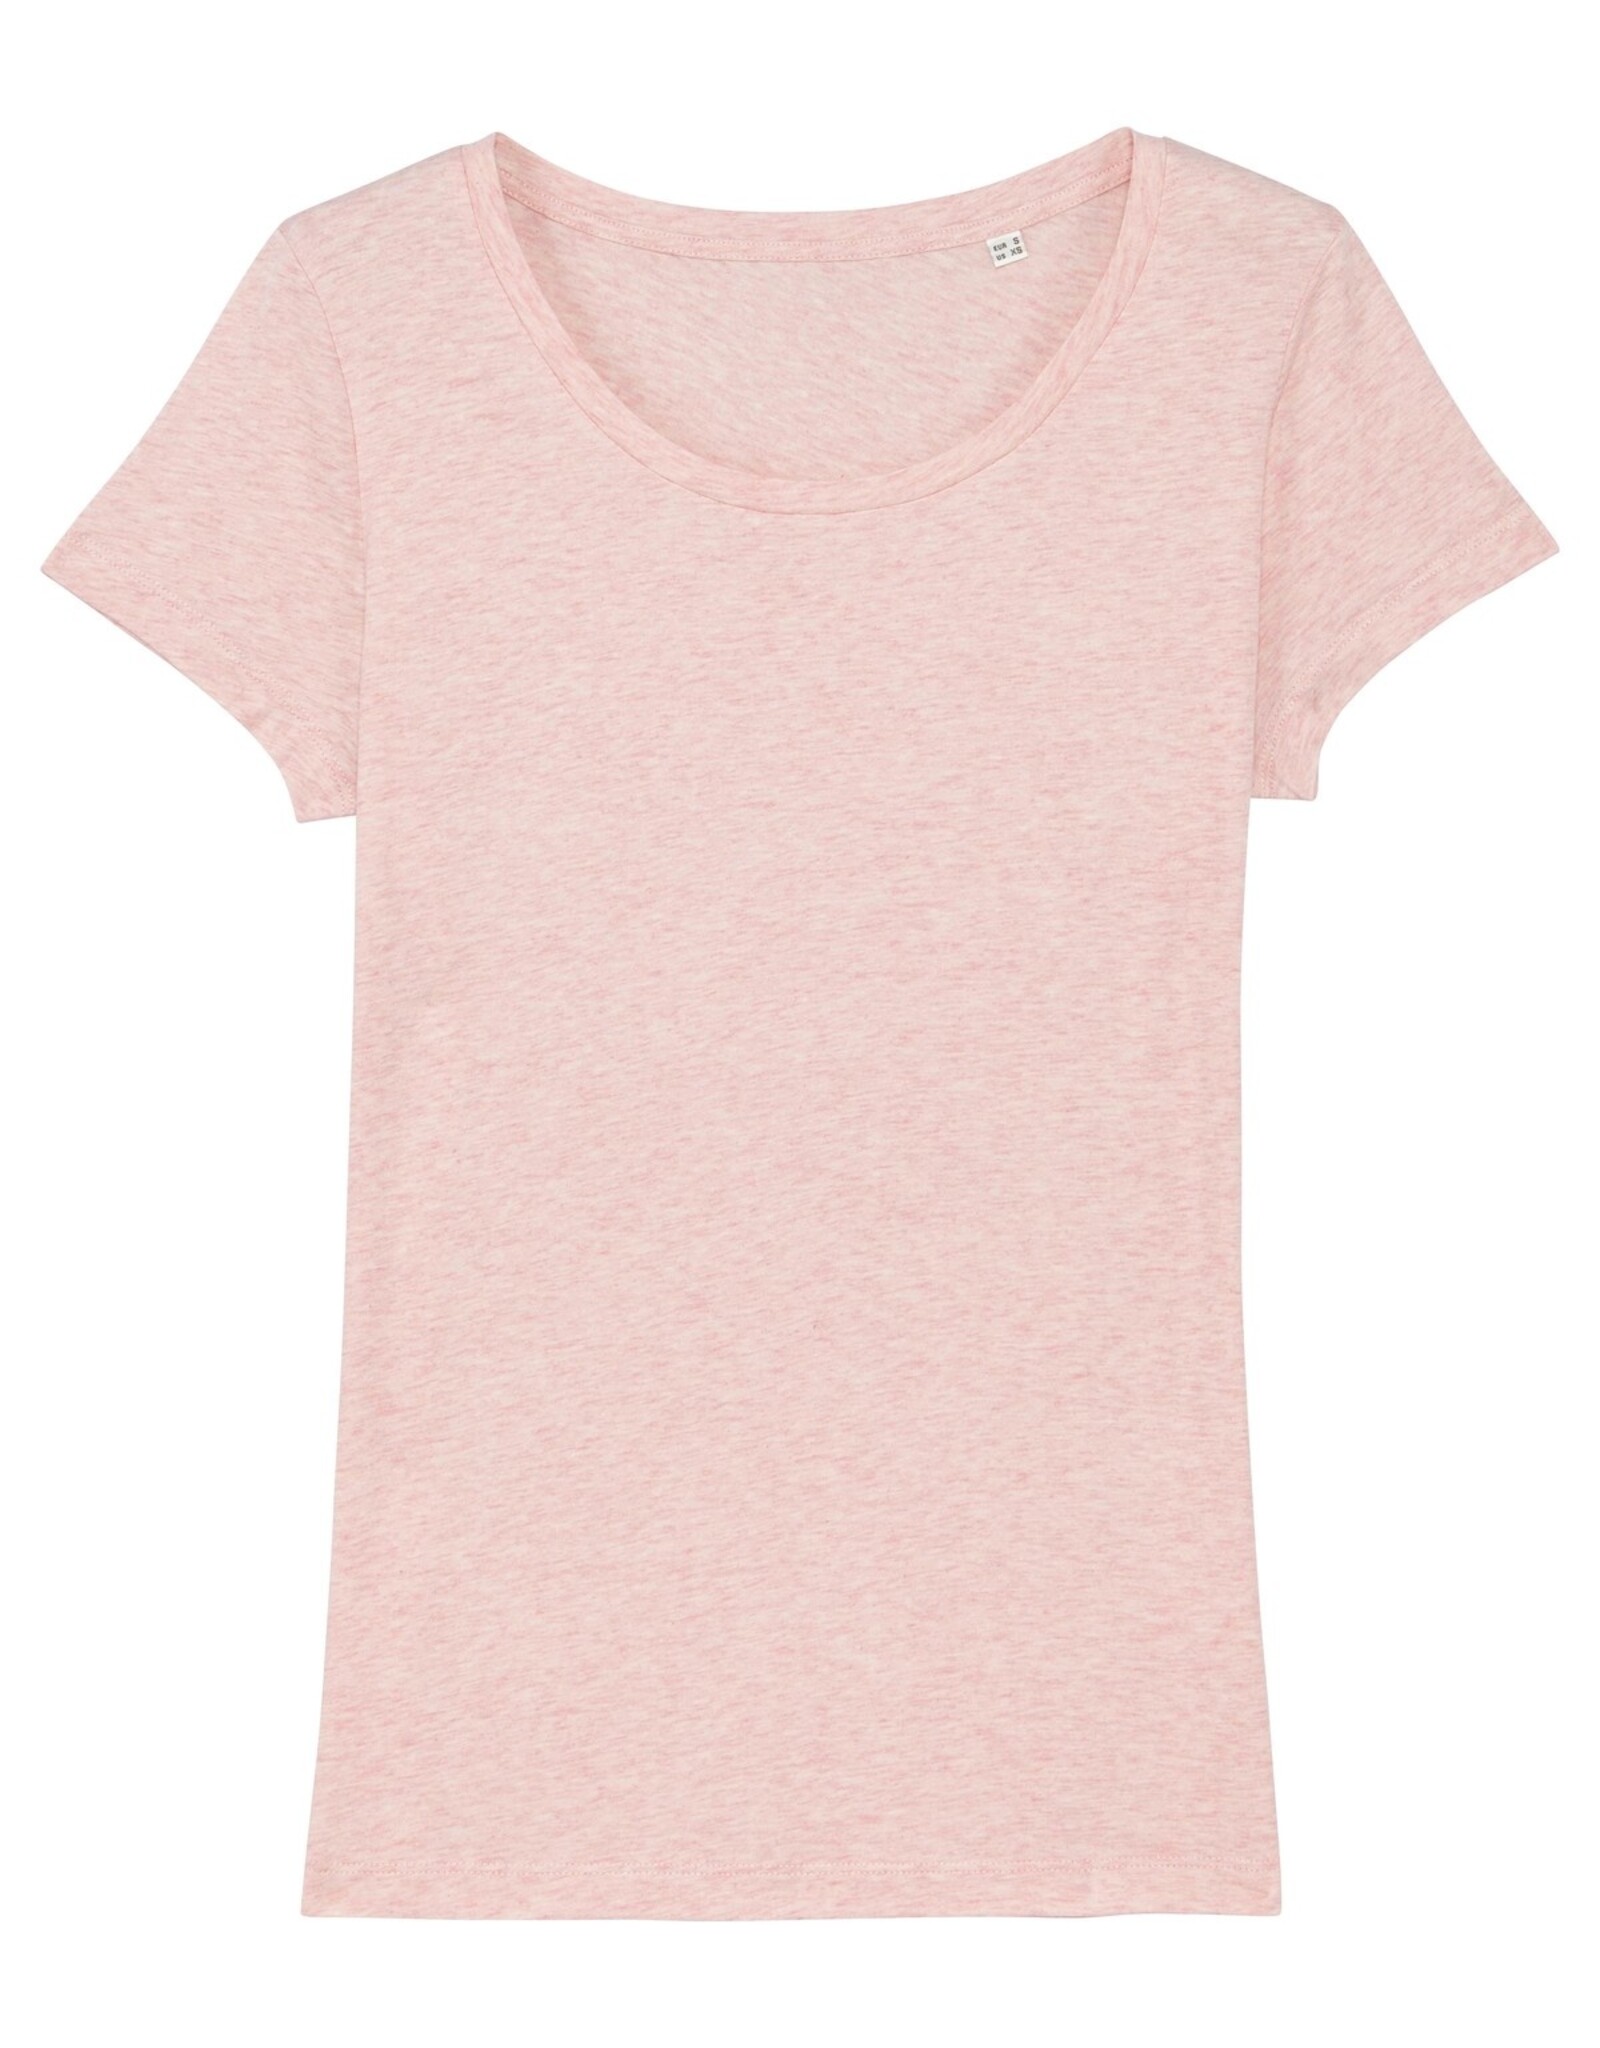 Shiba Boutique Designed for friends Personalized T-Shirt Women